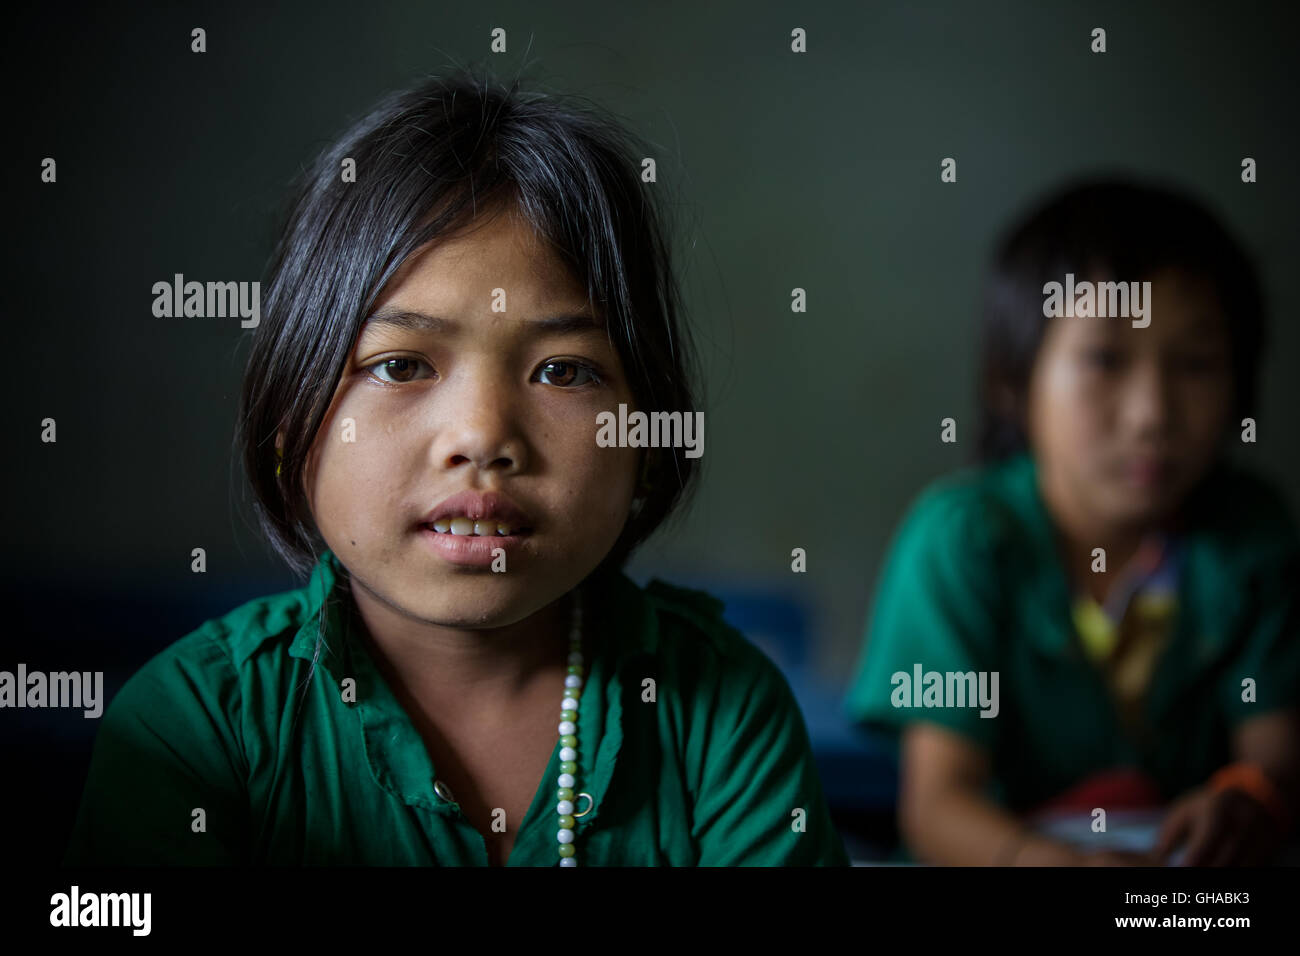 Students in a school in Bandarban - Bangladesh. Stock Photo